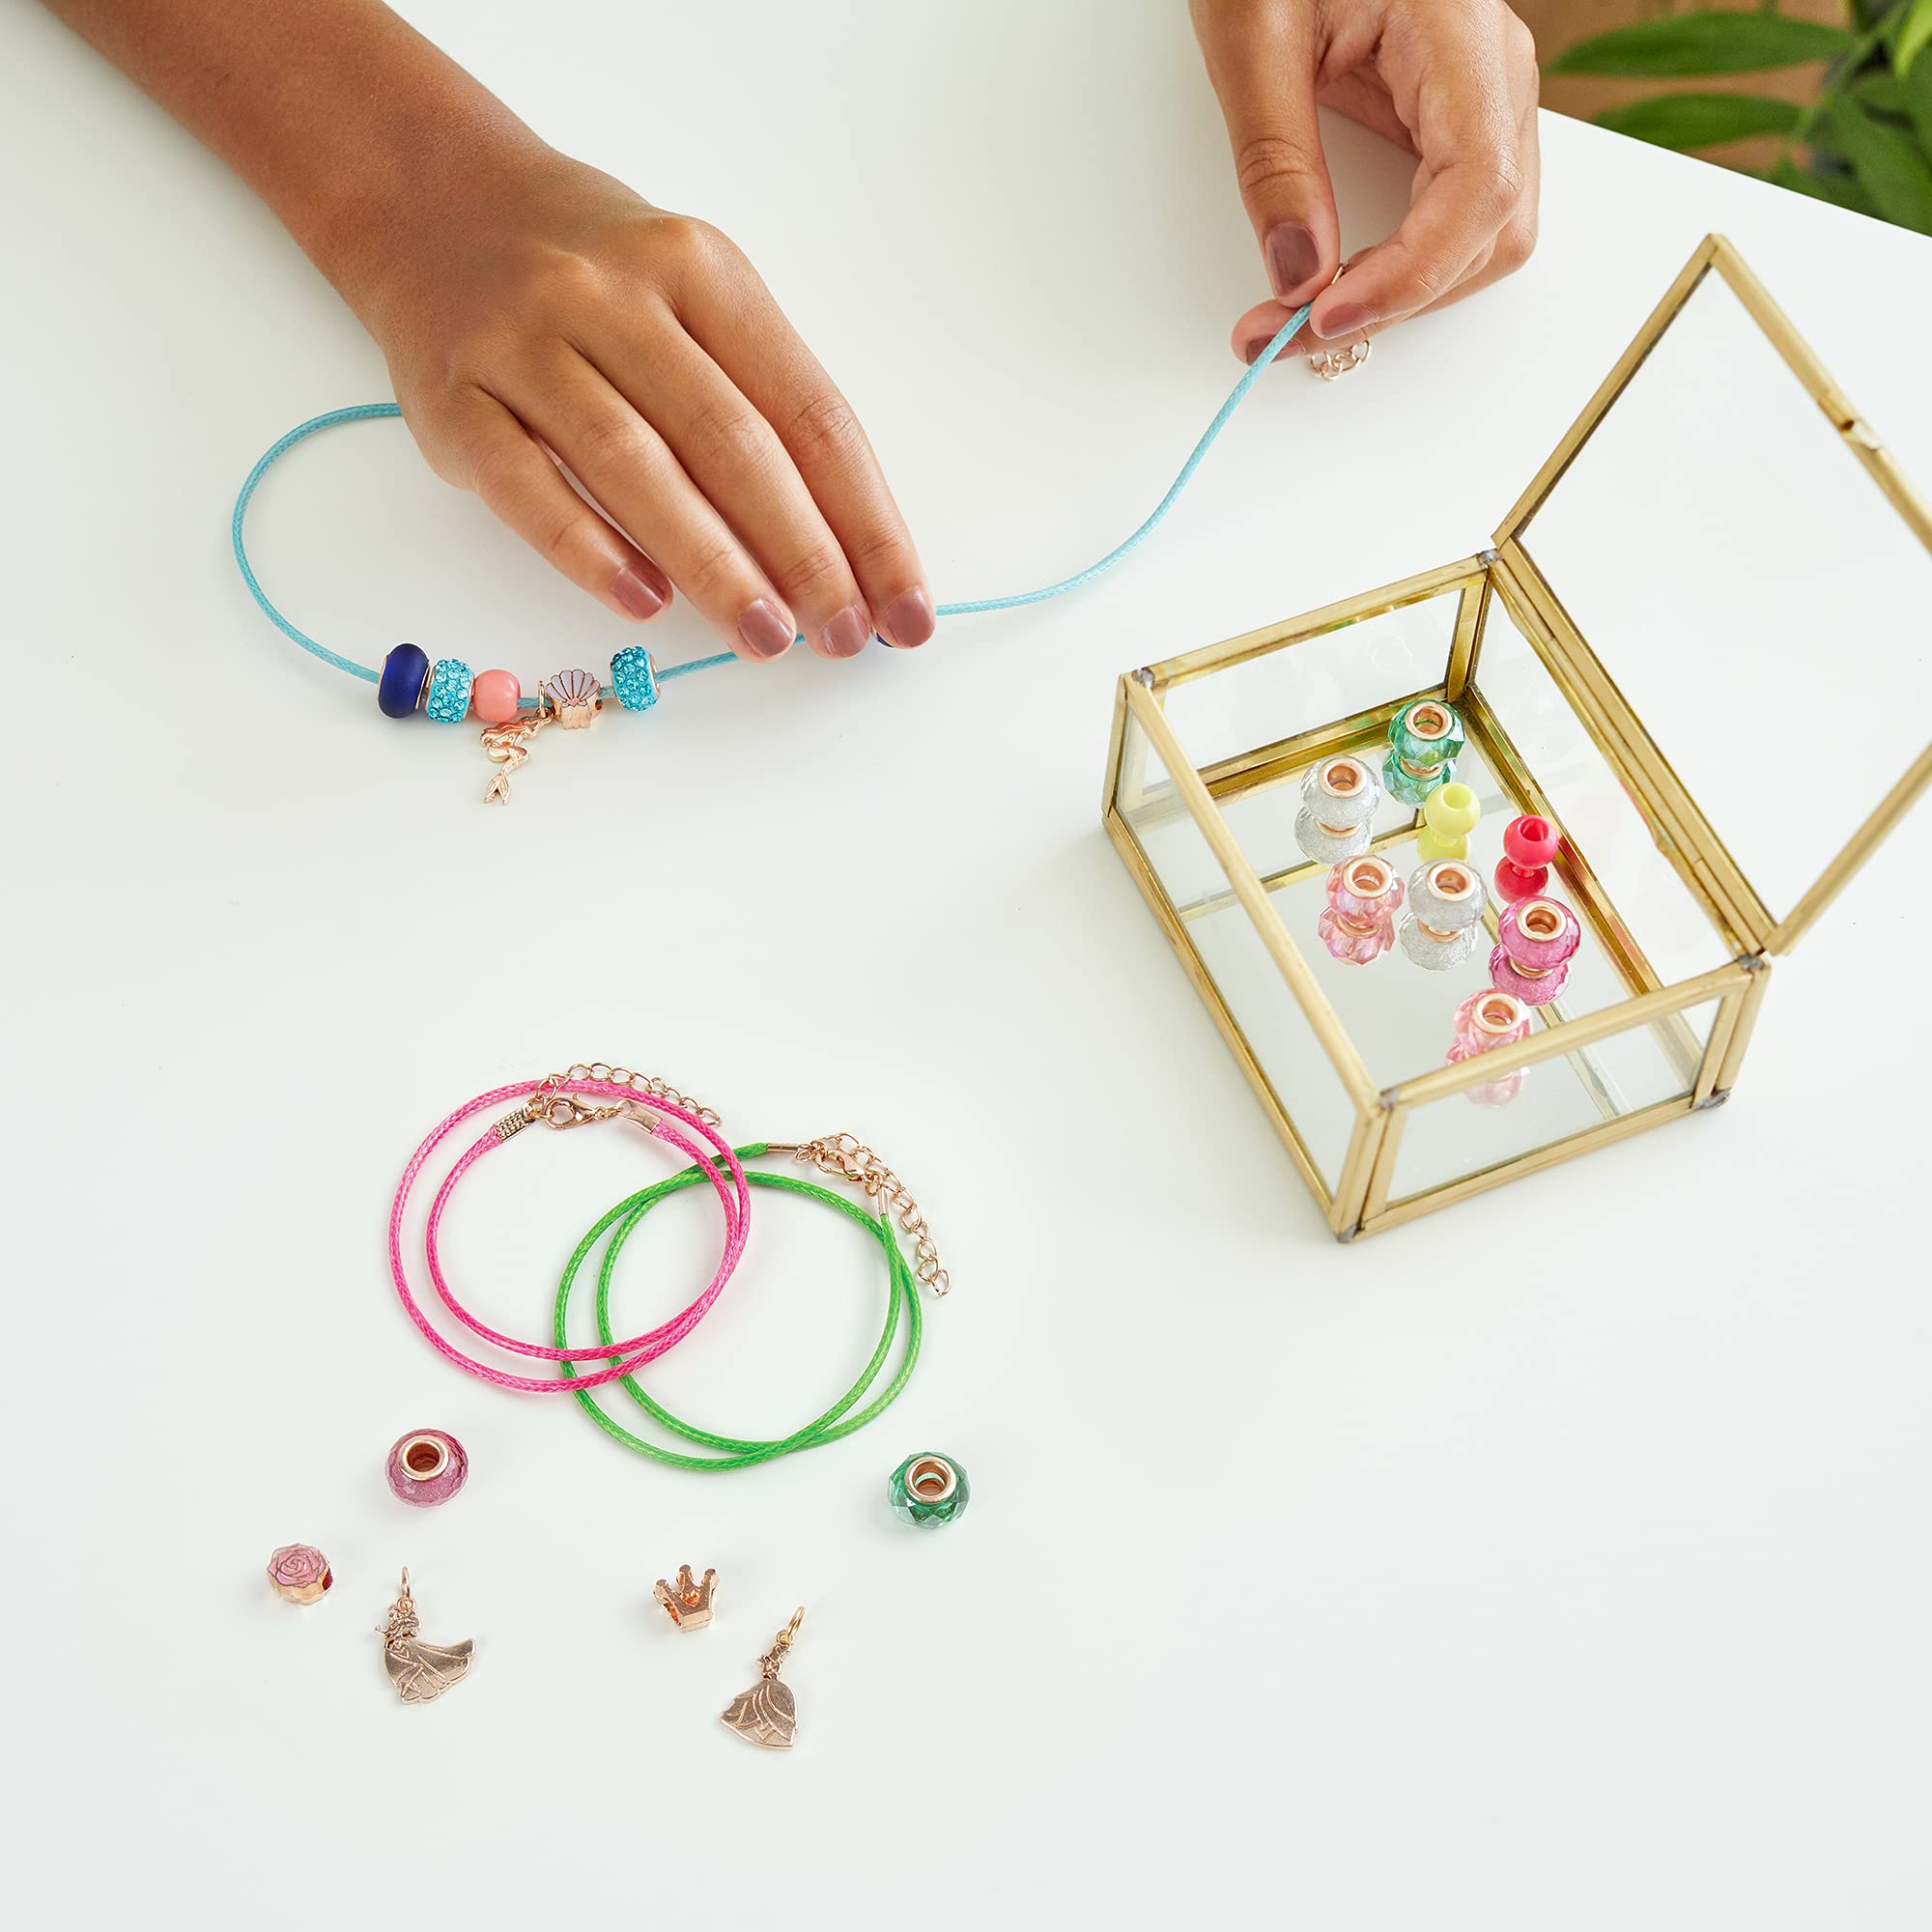 Make It Real - Ultimate Princess Royal Jewels and Gems - DIY Charm Bracelet Making Kit with Disney Princess Charms - Arts & Crafts Bead Kit for Girls & Teens - Makes 3 Bracelets - Ages 8+